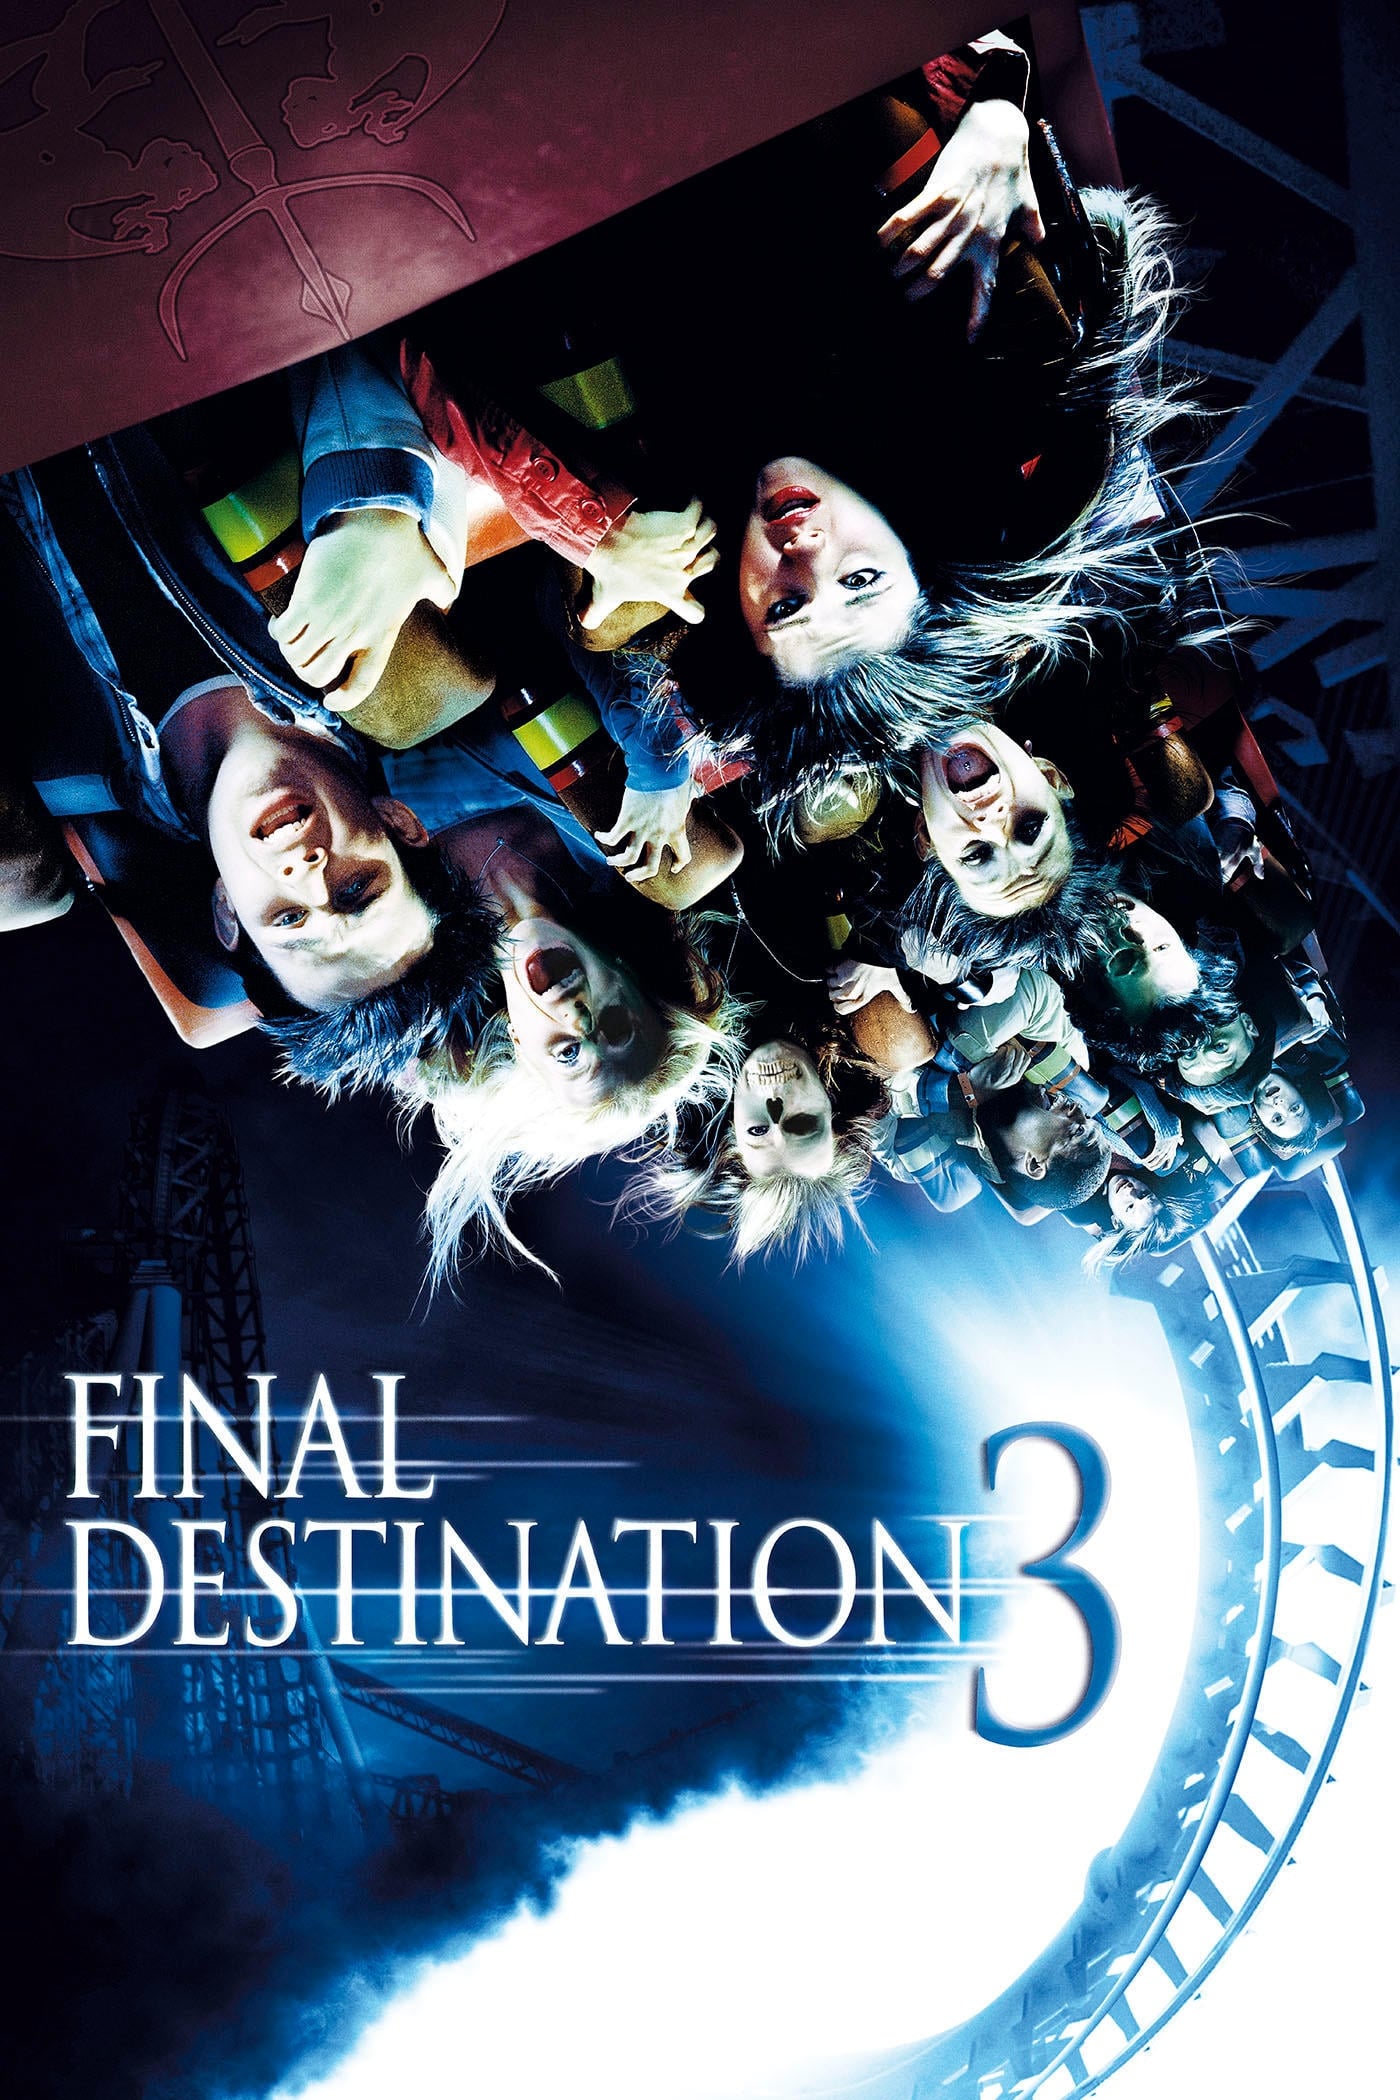 Destino final 3 (2006)